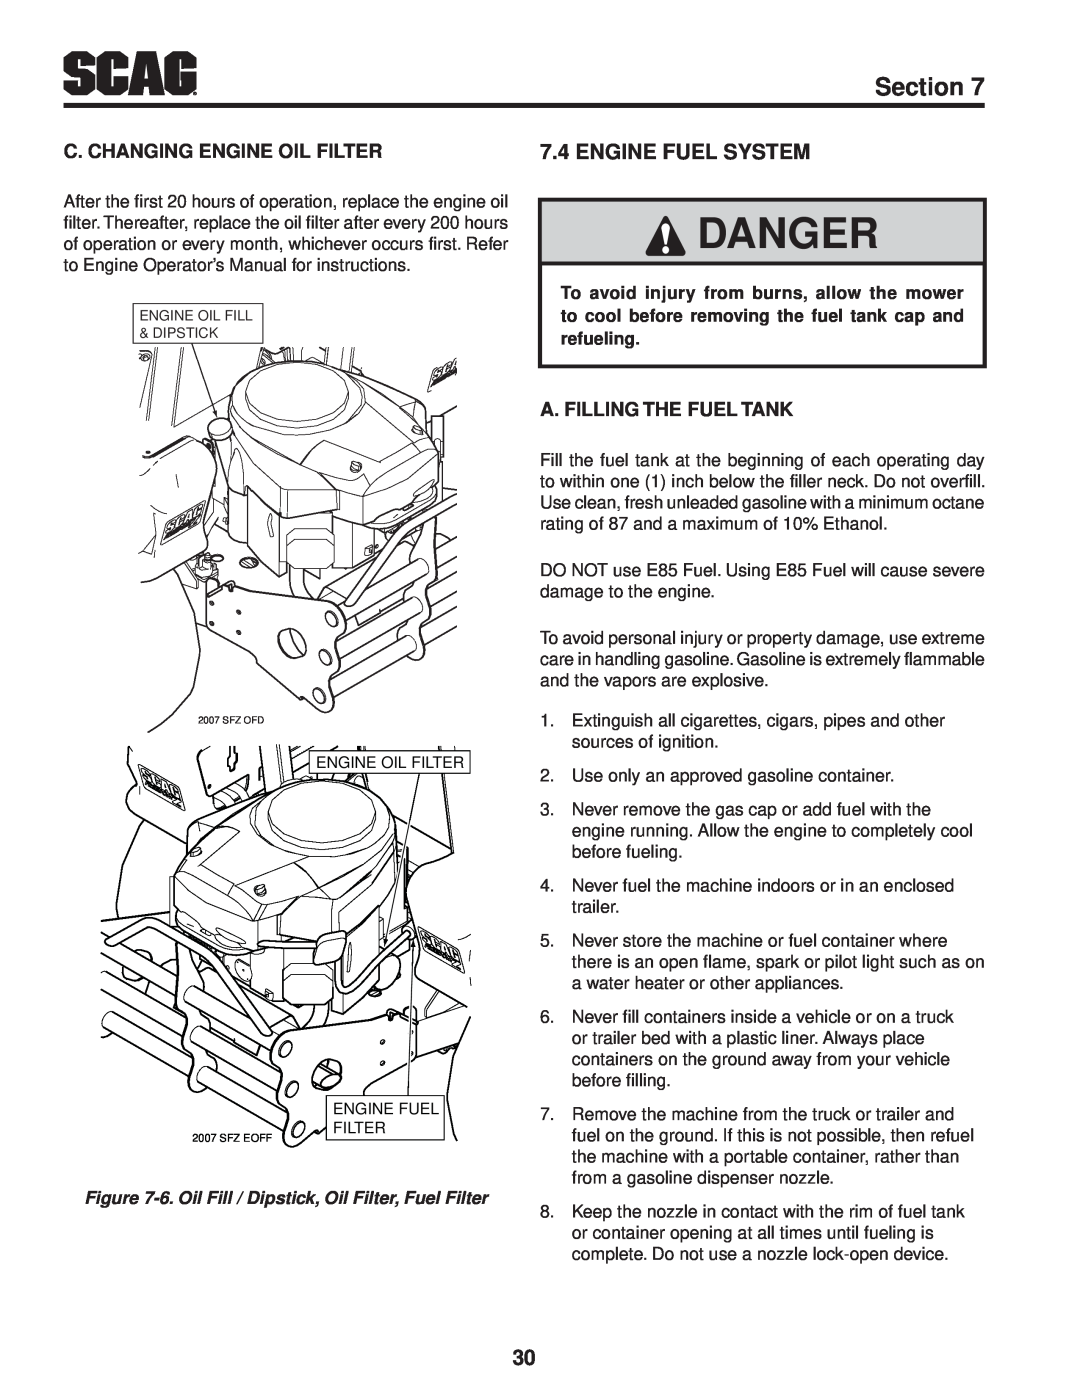 Scag Power Equipment SFZ61-28BS, SFZ36-20BS, SFZ36-17KA Engine Fuel System, Danger, Section, C. Changing Engine Oil Filter 